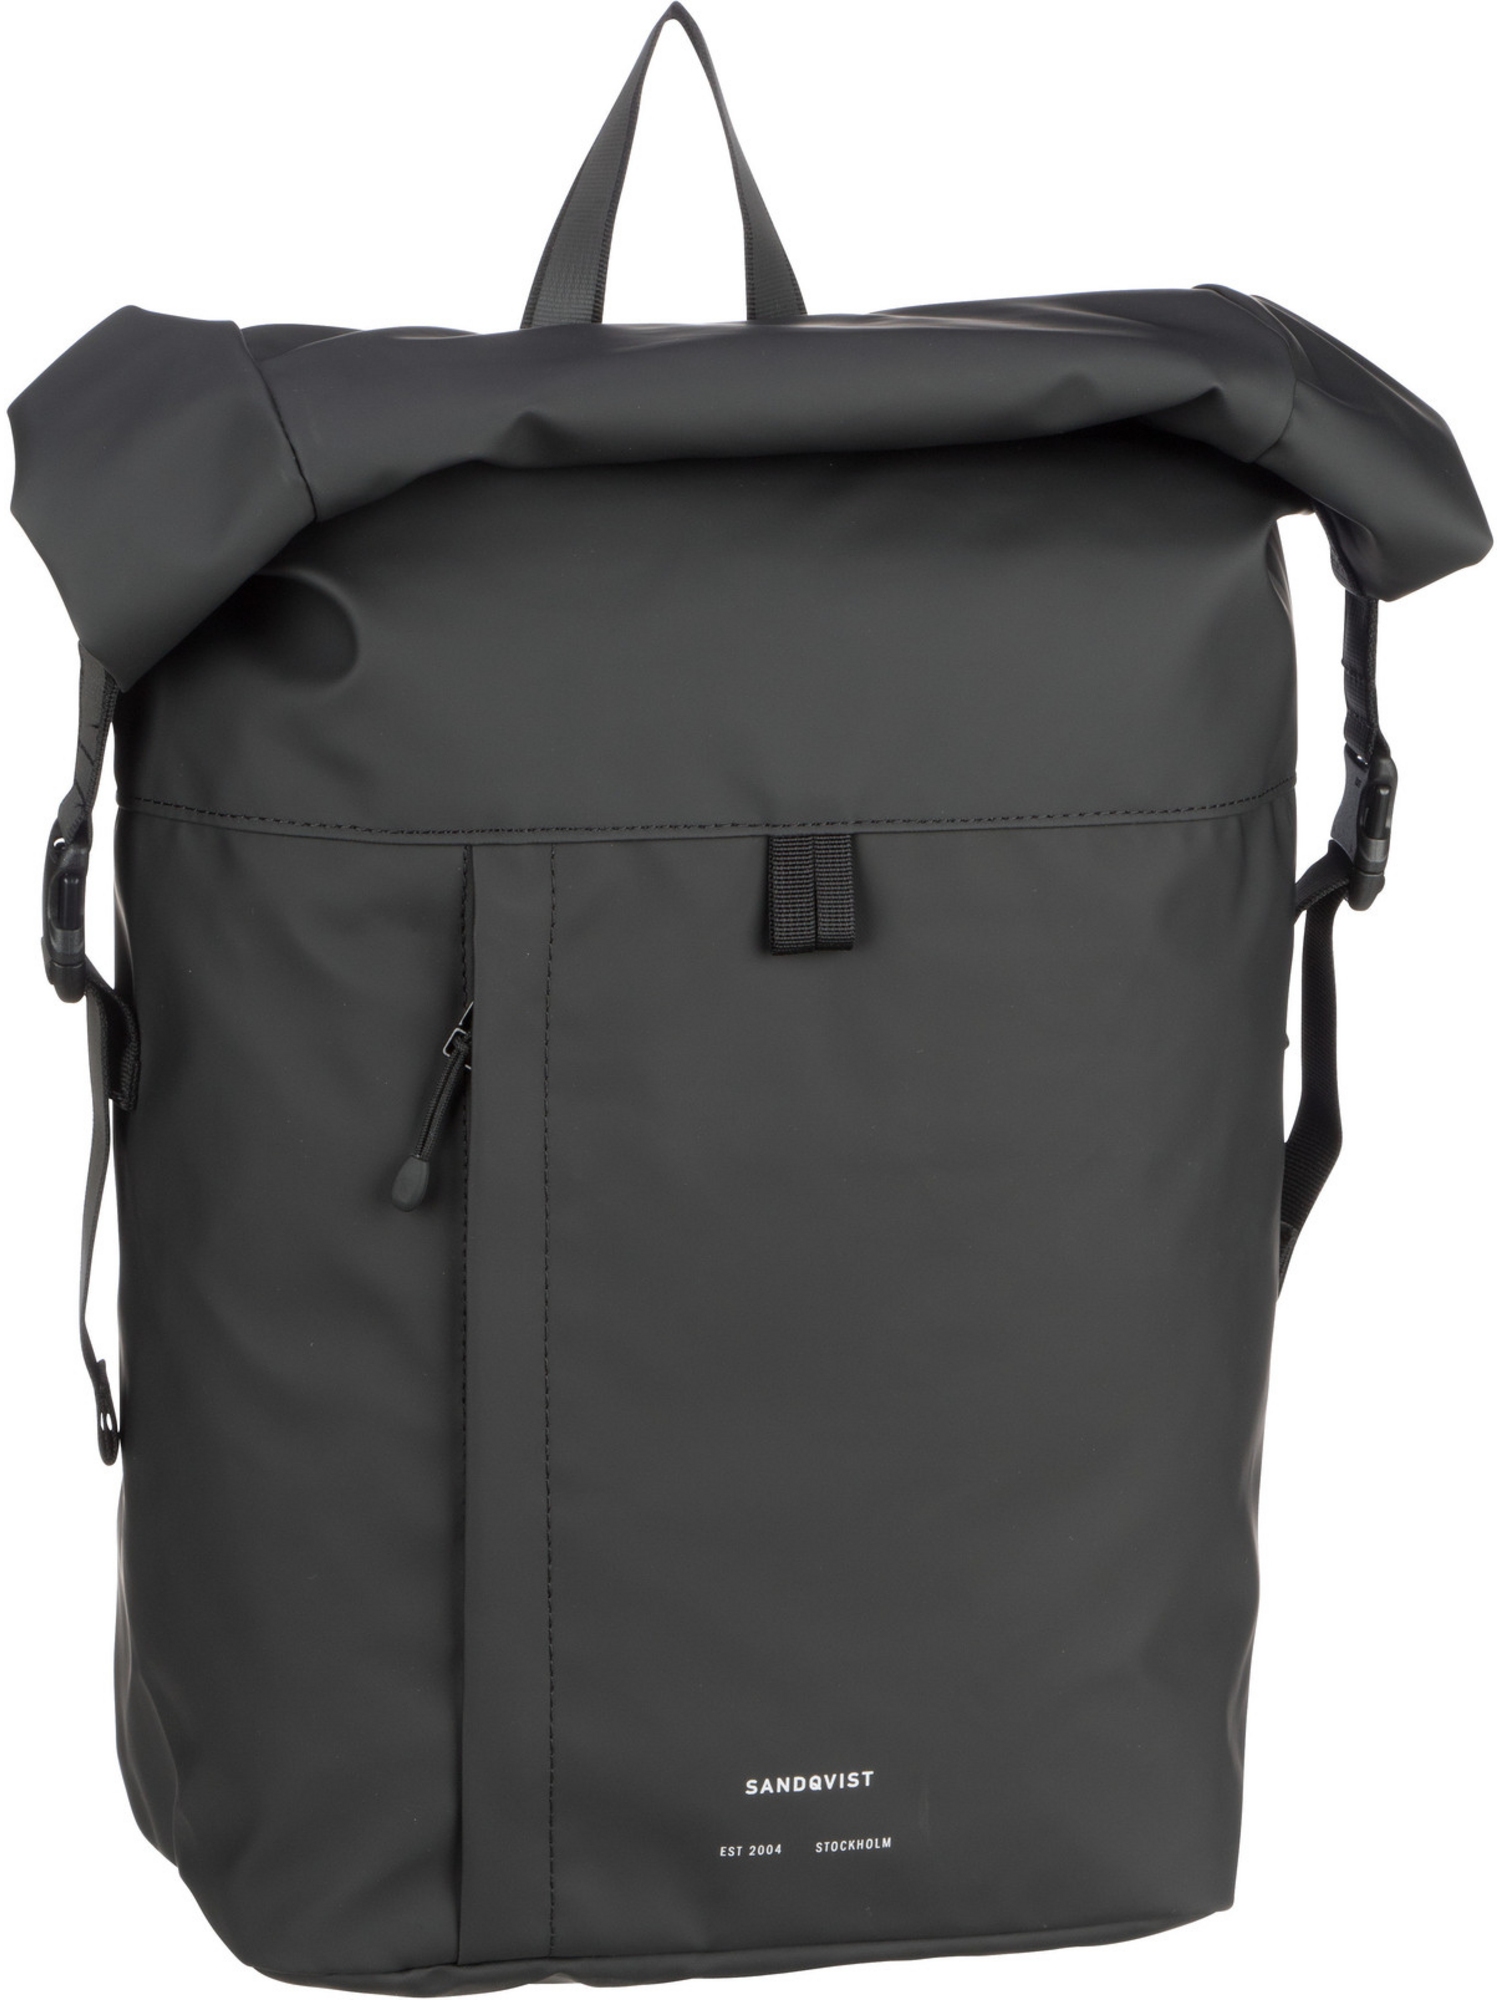 Рюкзак SANDQVIST/Backpack Konrad Backpack, черный рюкзак sandqvist konrad multi dark